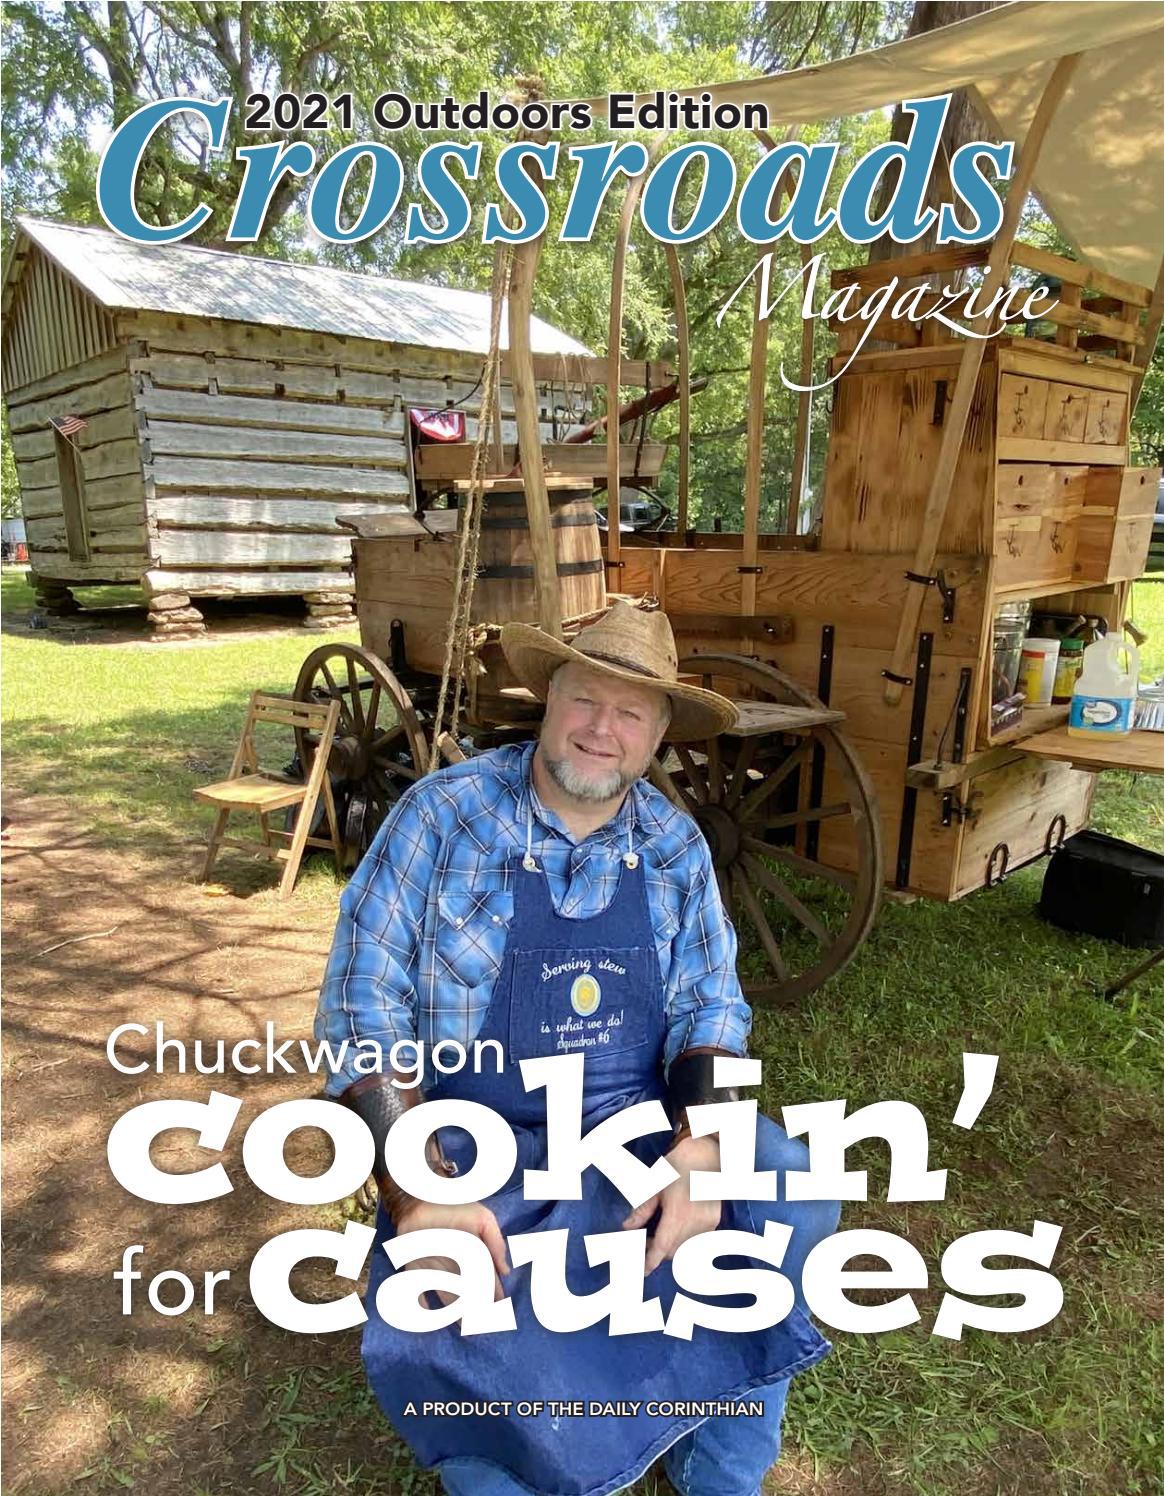 Crossroads Outdoors Magazine 2021